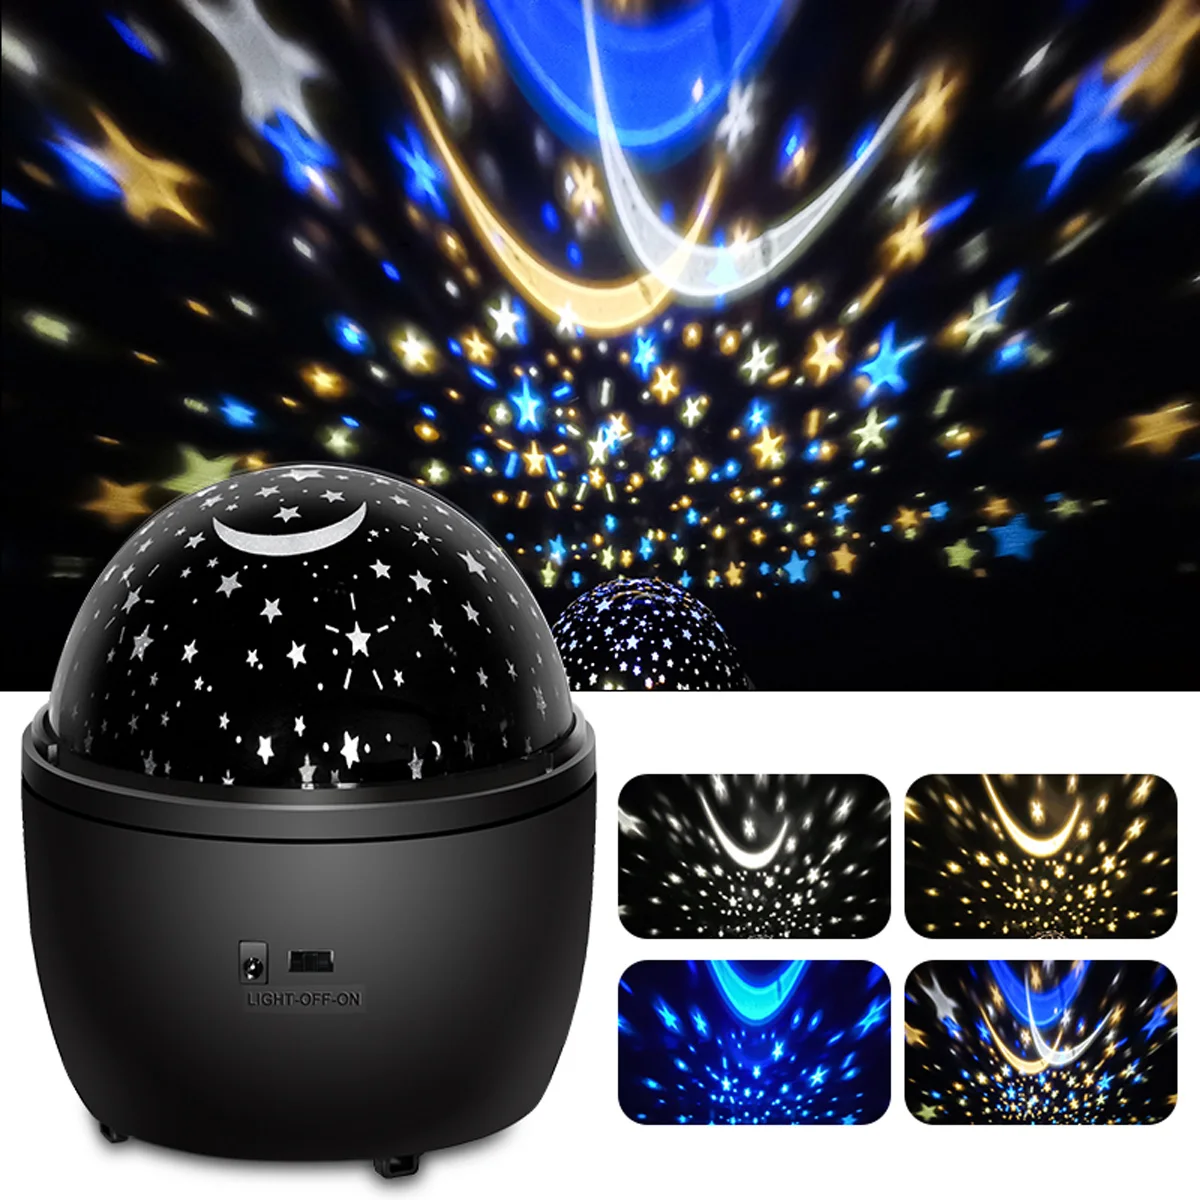 

USB Nursery Lamp Gift for Car Bedroom Ceiling LED Star Projector Night Light Rotating Starry Sky Lamp Stars Moon Lighting Ball